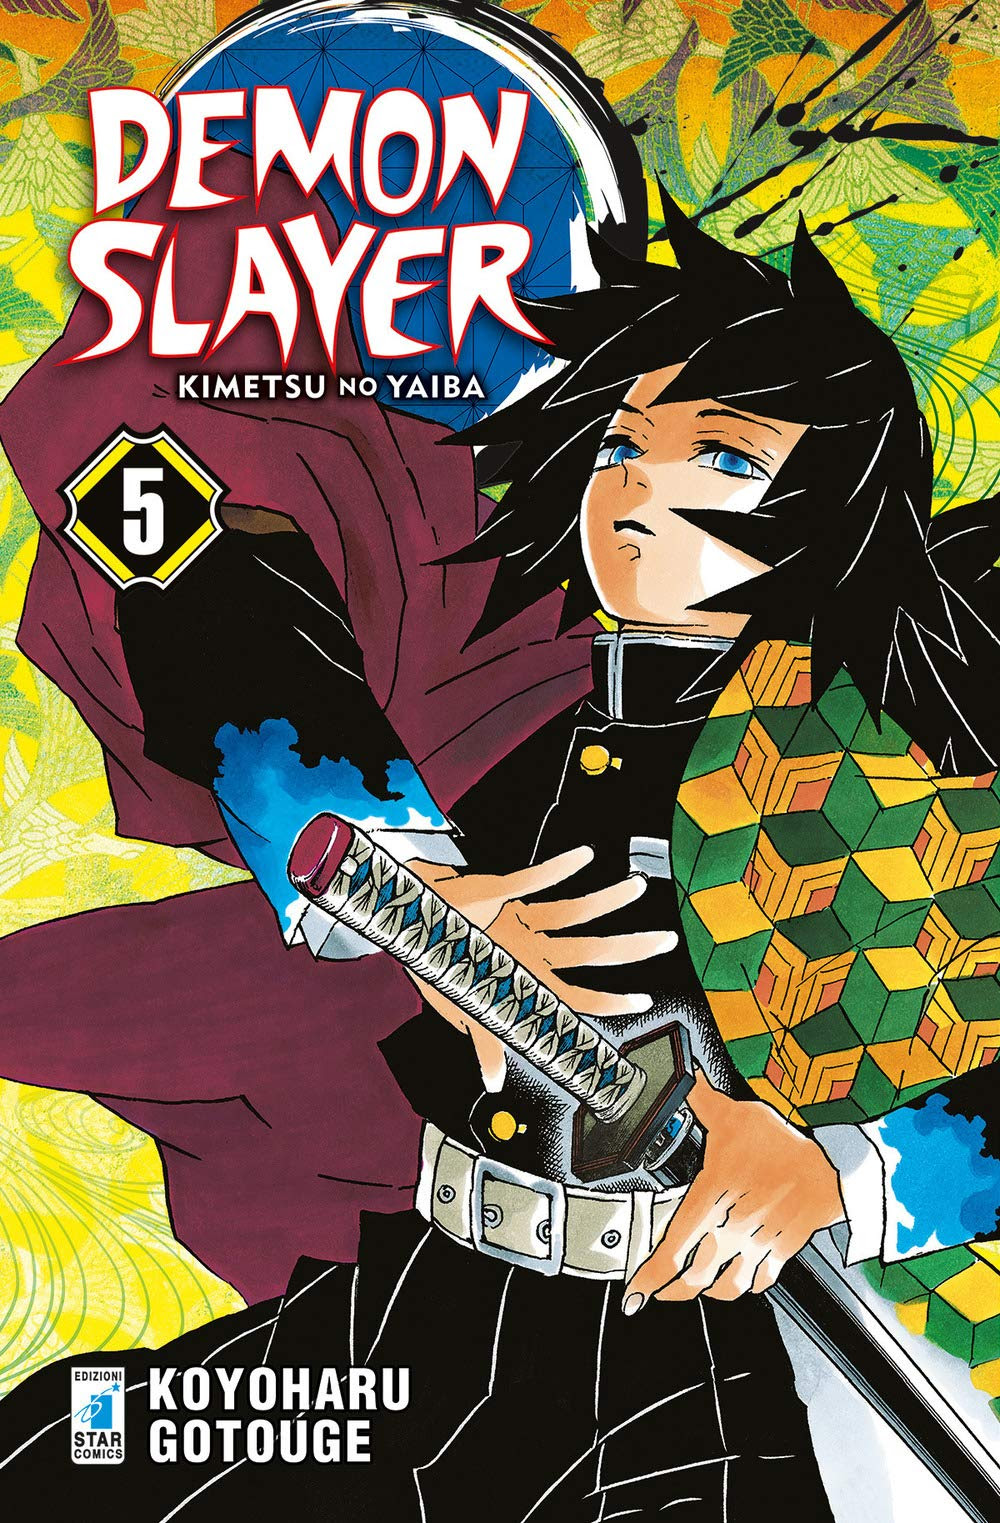 Demon Slayer: Kimetsu no Yaiba, Vol. 5 in Kindle/PDF/EPUB